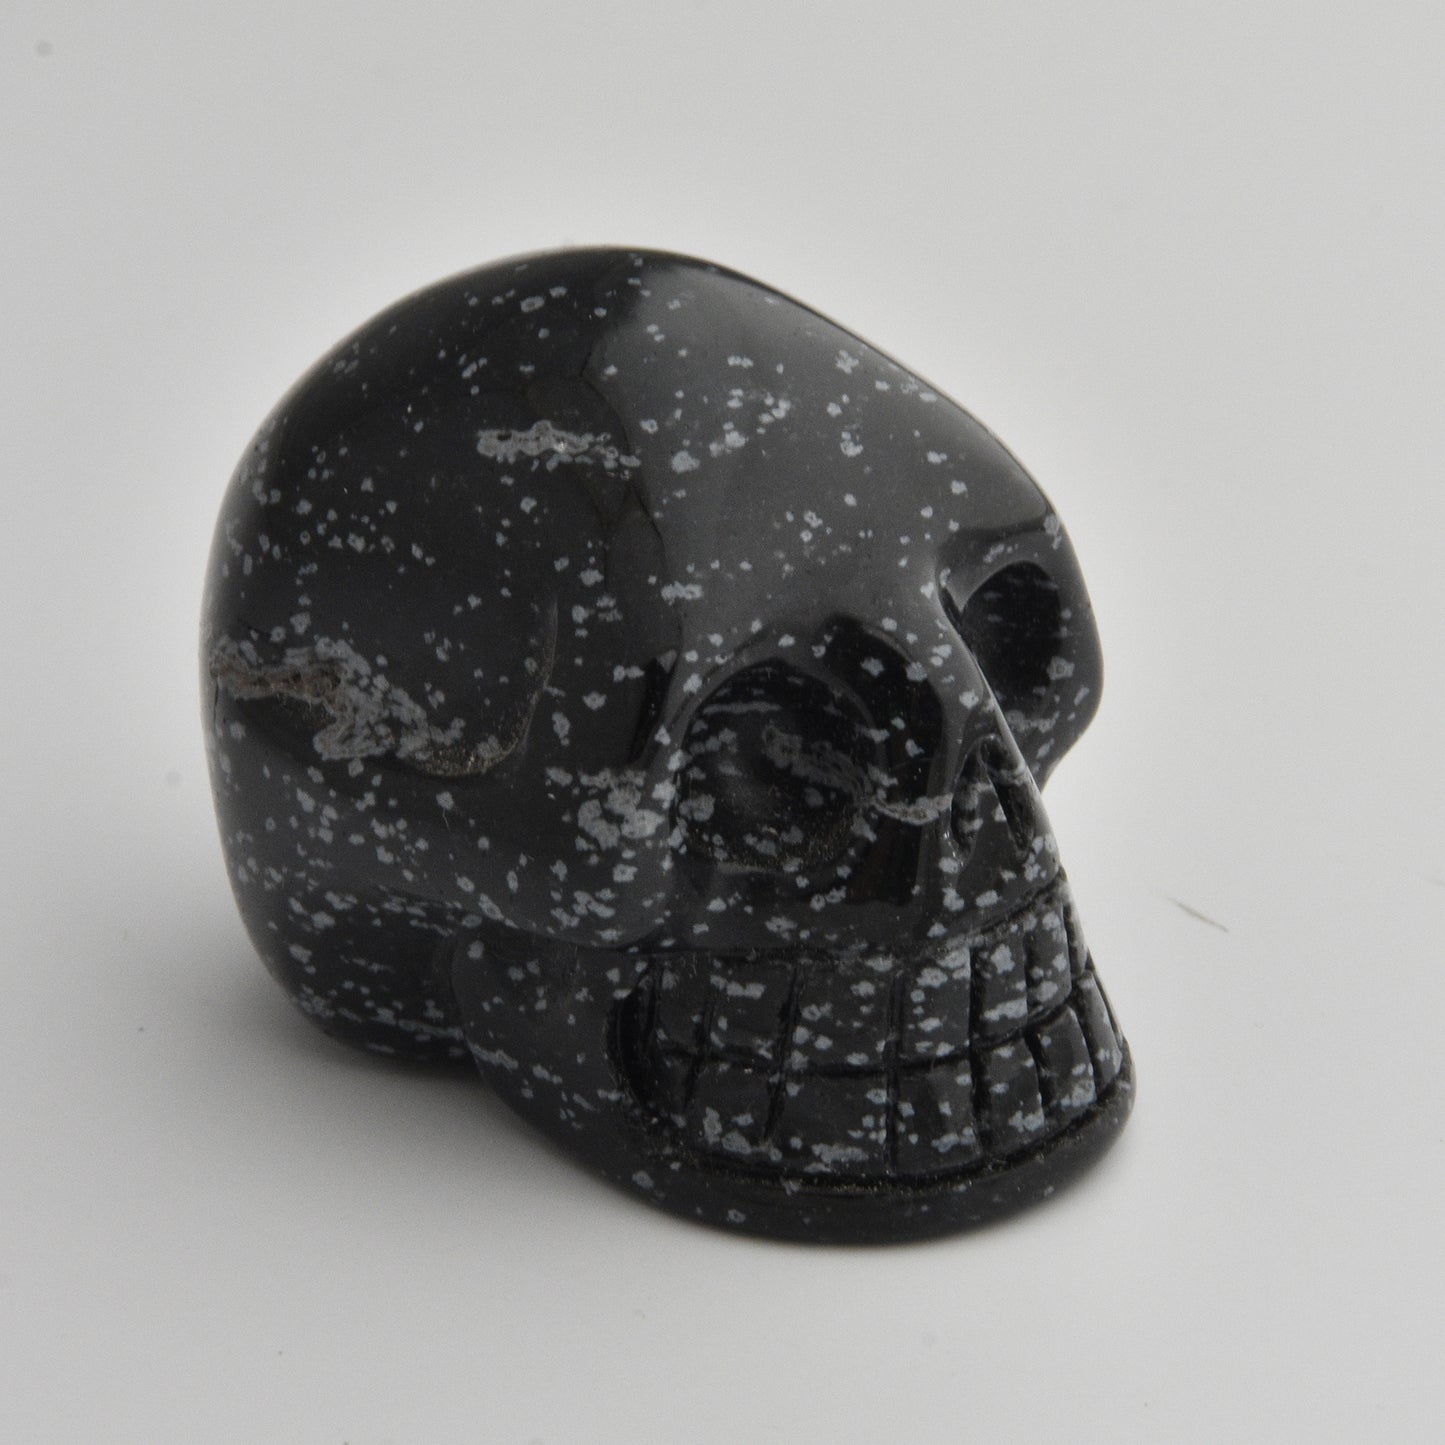 Snowflake Obsidian Skull